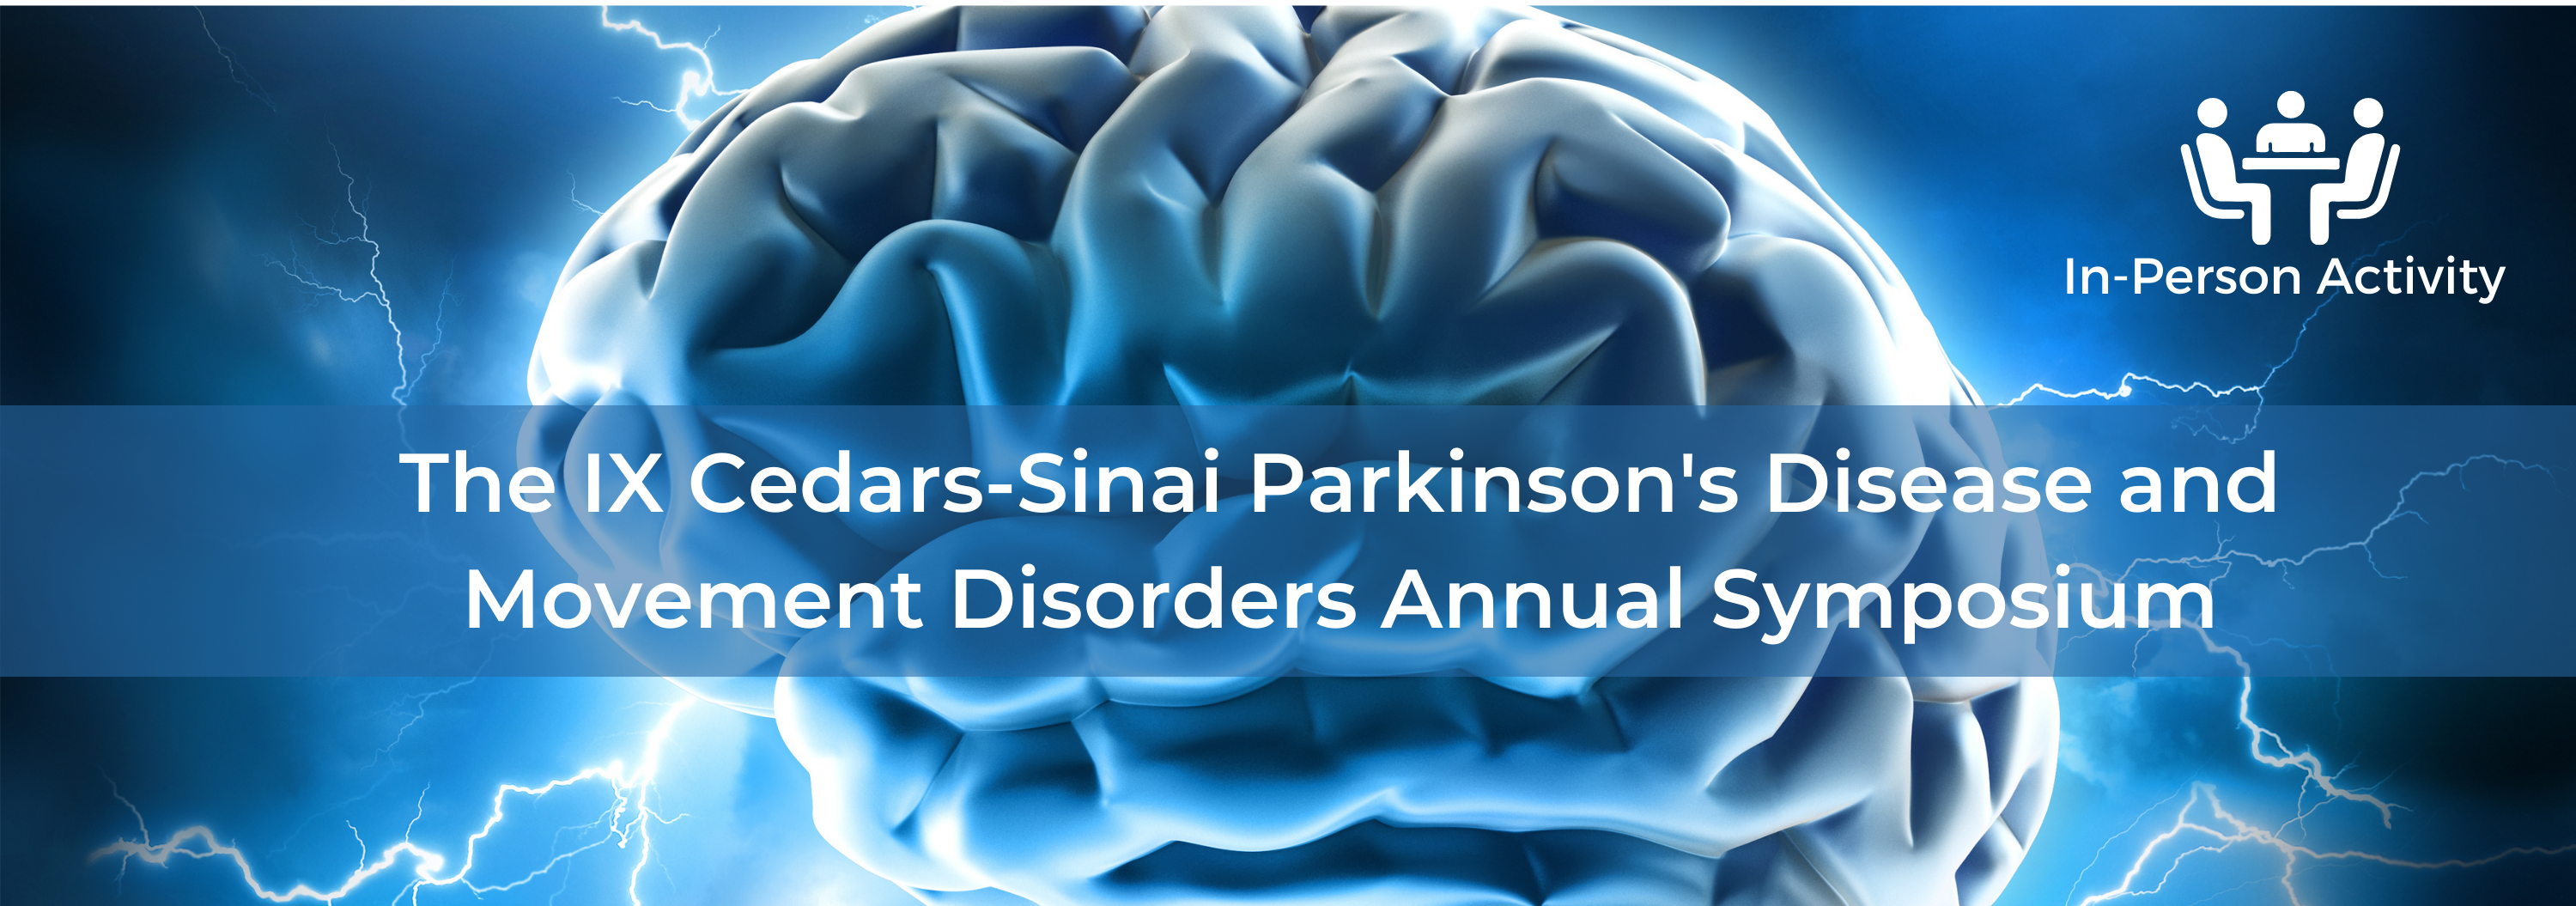 The IX Cedars-Sinai Parkinson's Disease and Movement Disorders Annual Symposium Banner